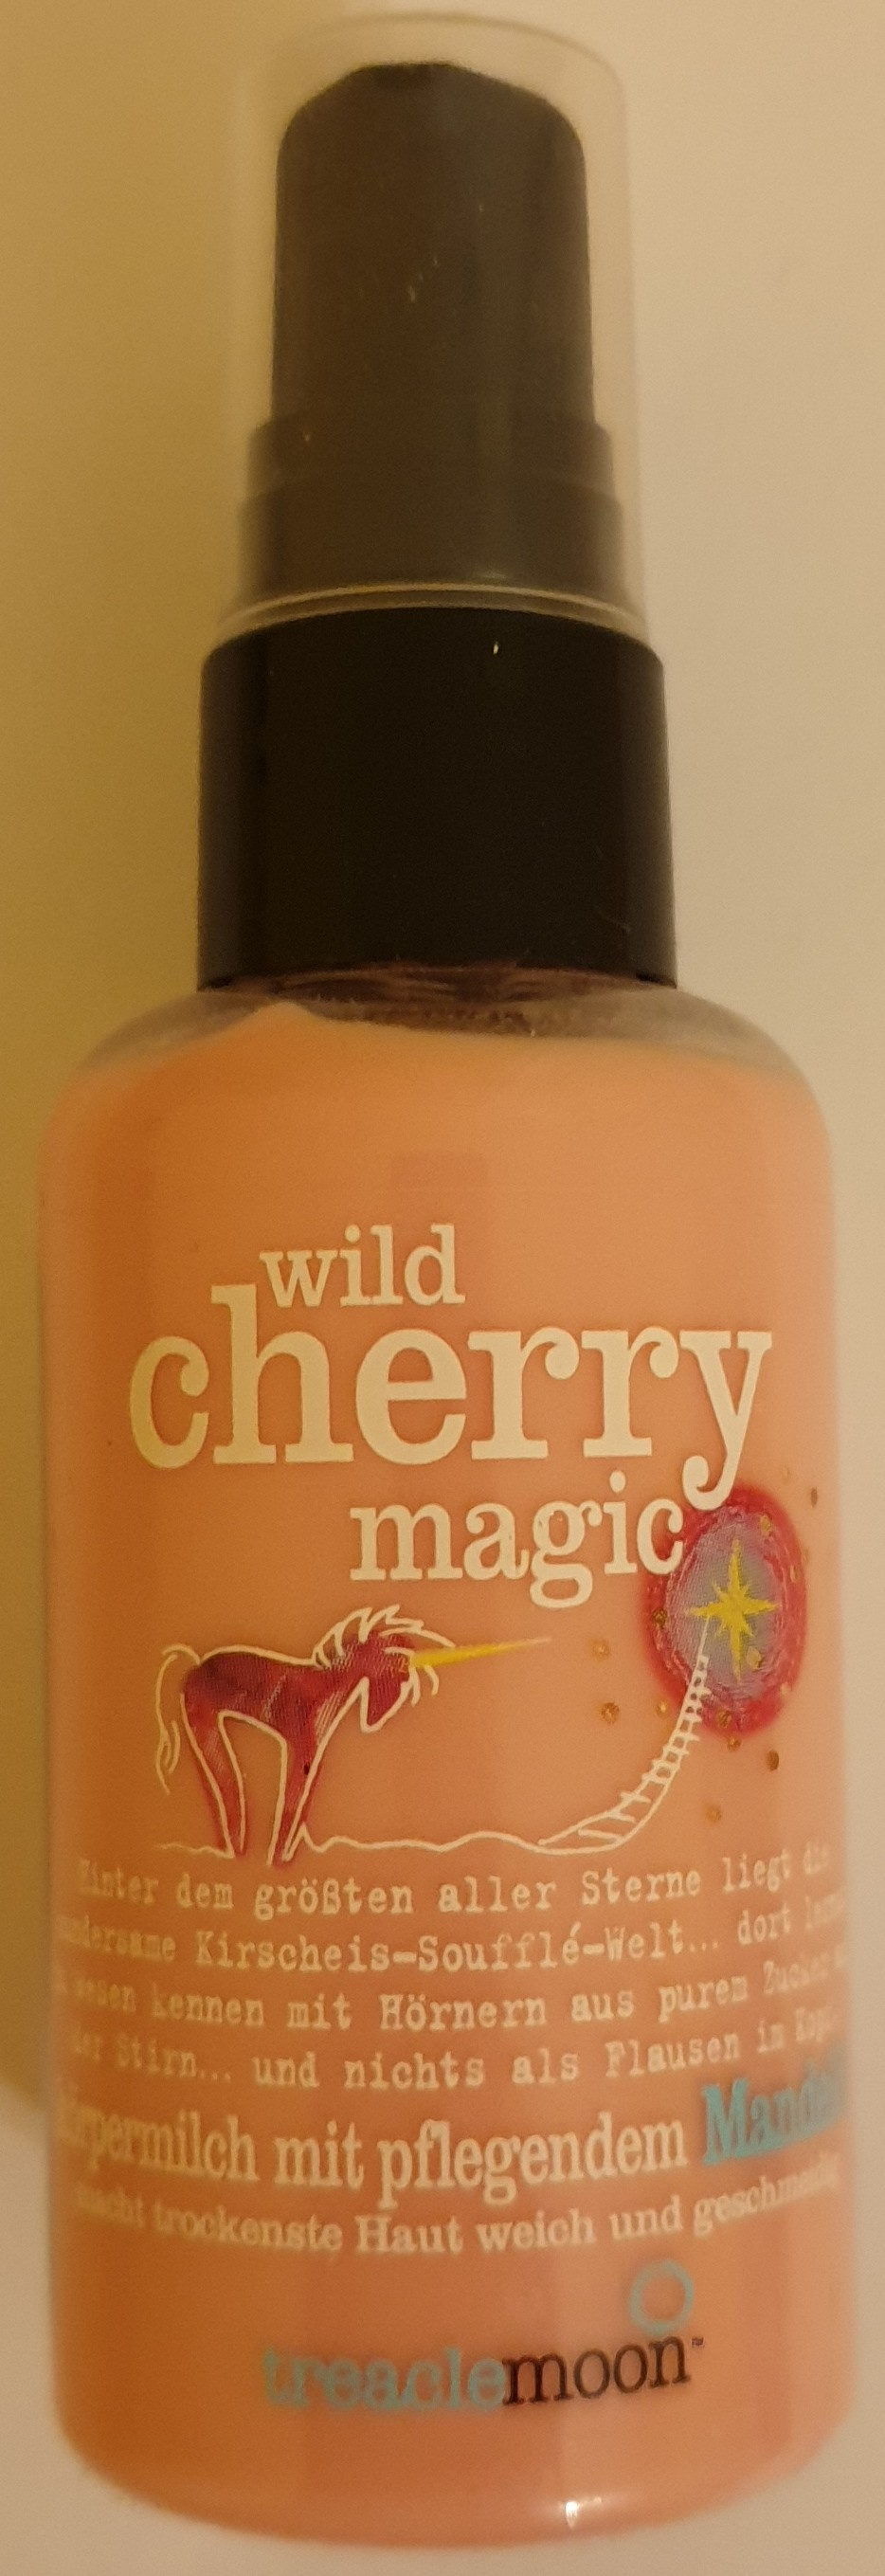 wild cherry magic - 製品 - de